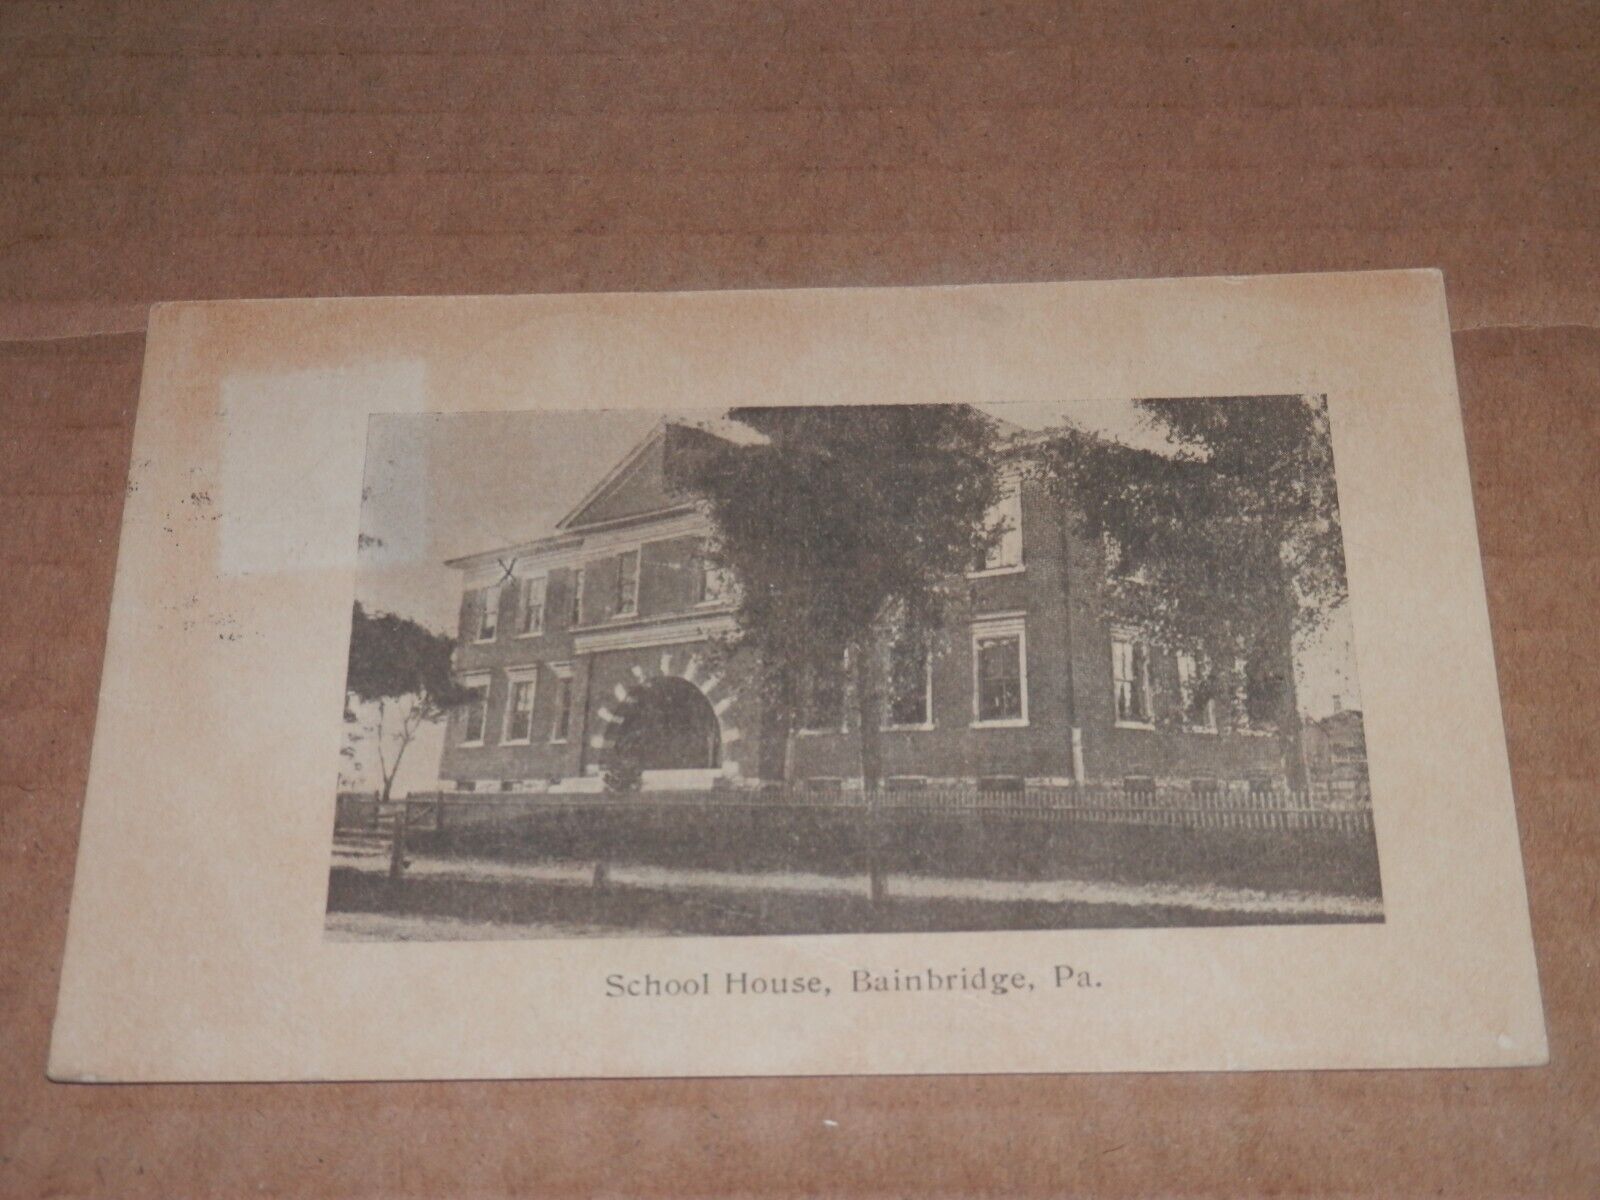 BAINBRIDGE PA - 1913 USED POSTCARD - SCHOOL HOUSE - LANCASTER COUNTY